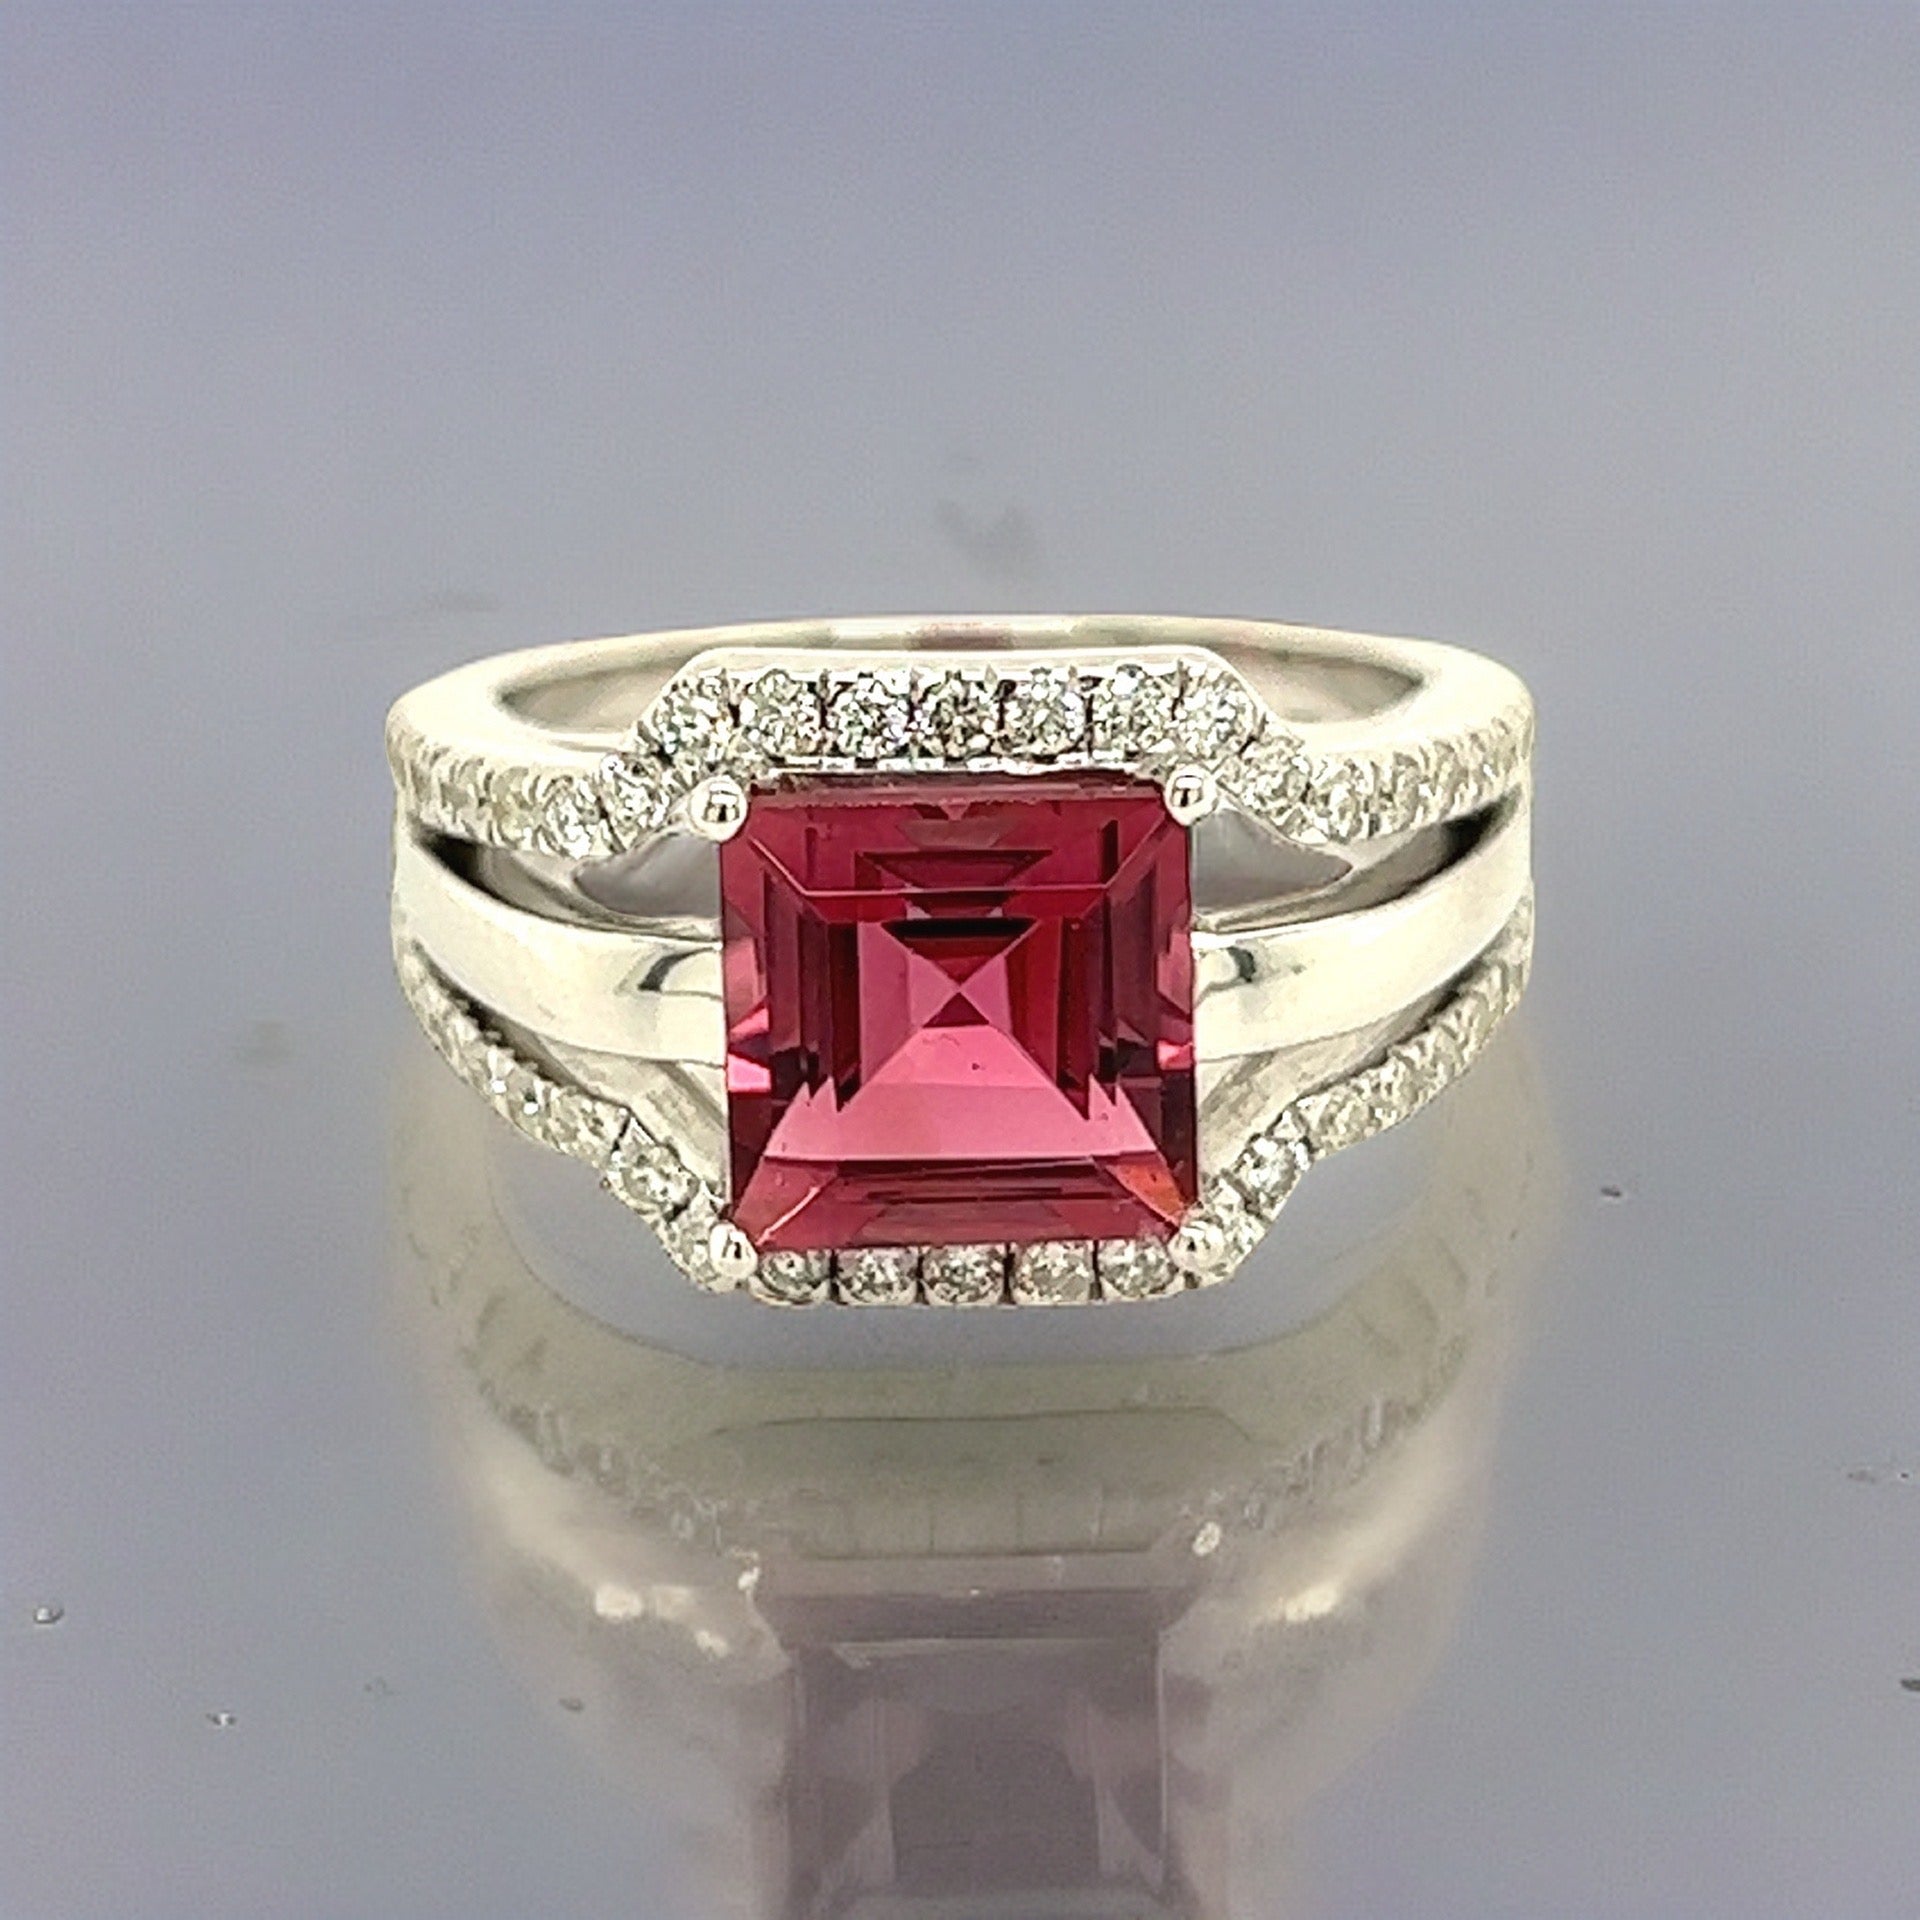 Natural Tourmaline Diamond Ring Size 6.5 14k W Gold 3.24 TCW Certified $3,950 217856 - Certified Fine Jewelry